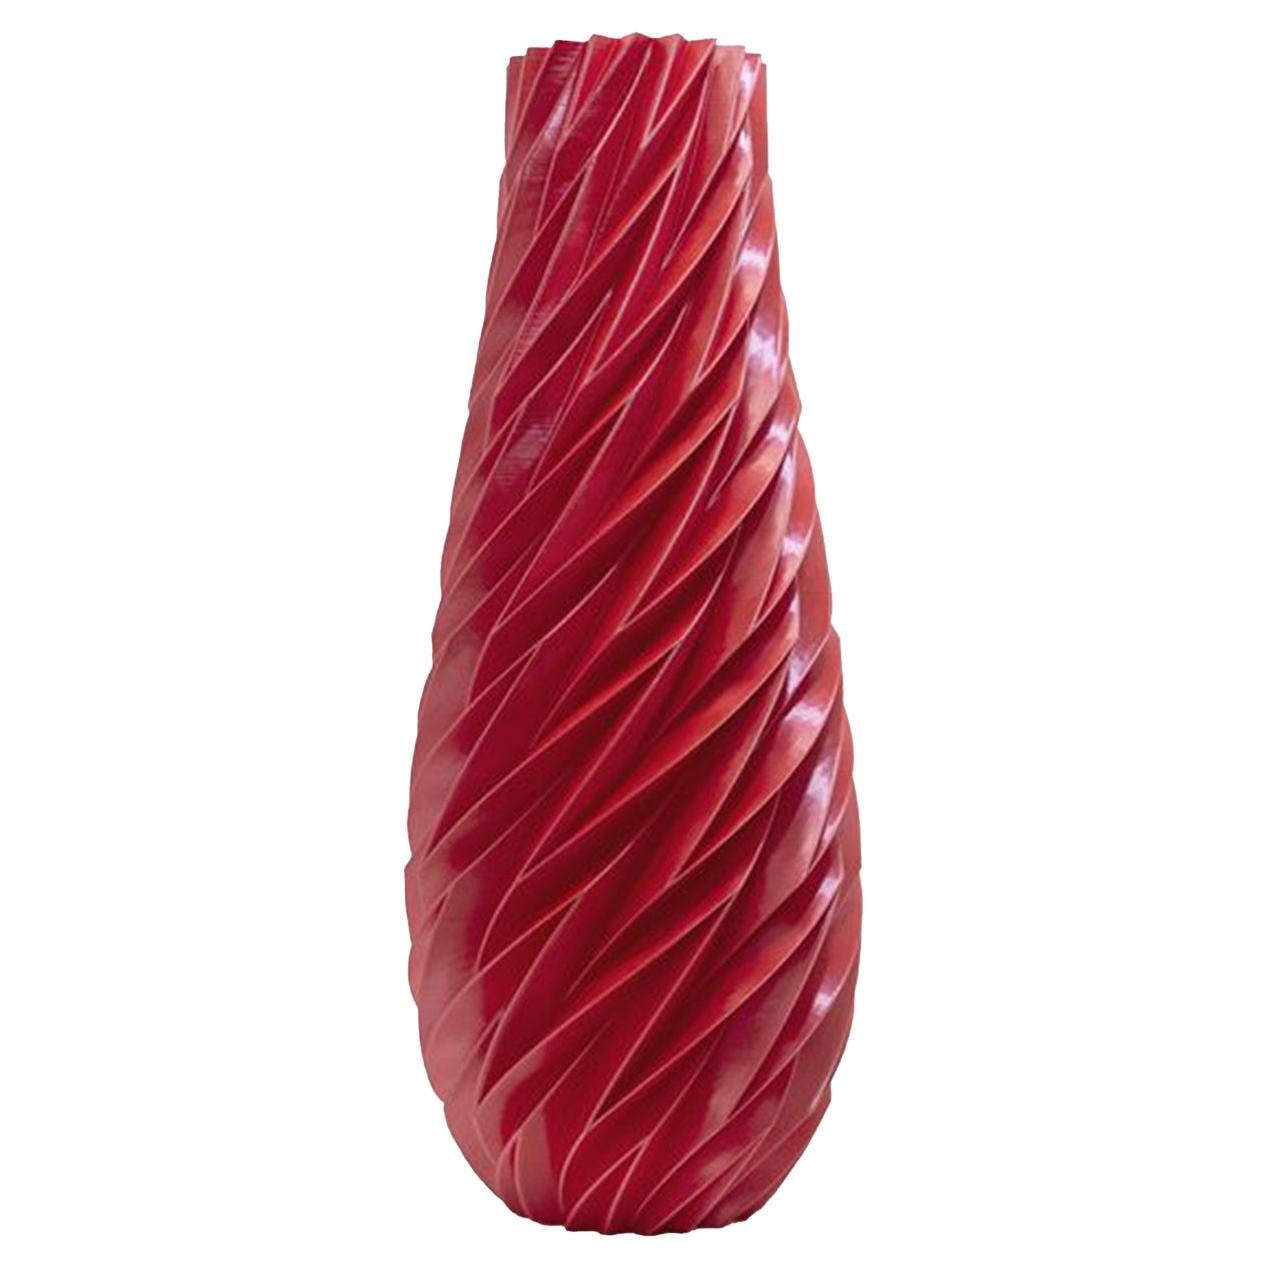 Saphira Red Vase Sculpture